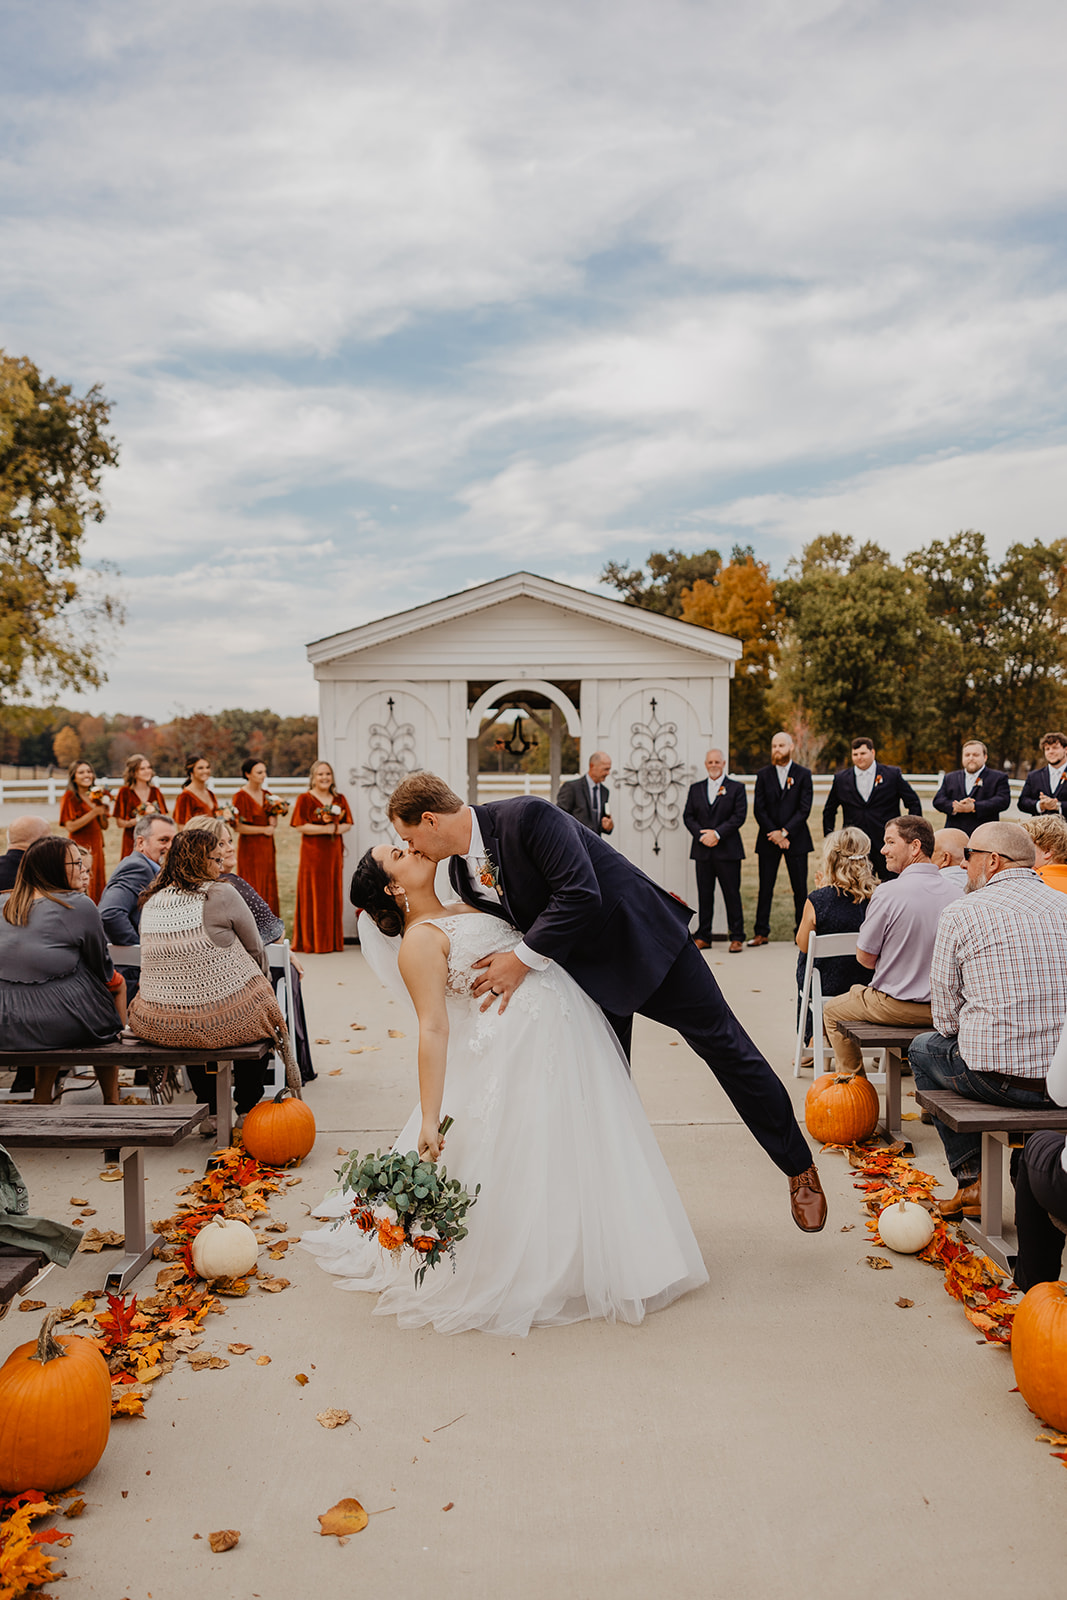 How To Make a Seamless Wedding Day Timeline | Nashville Wedding Photographer